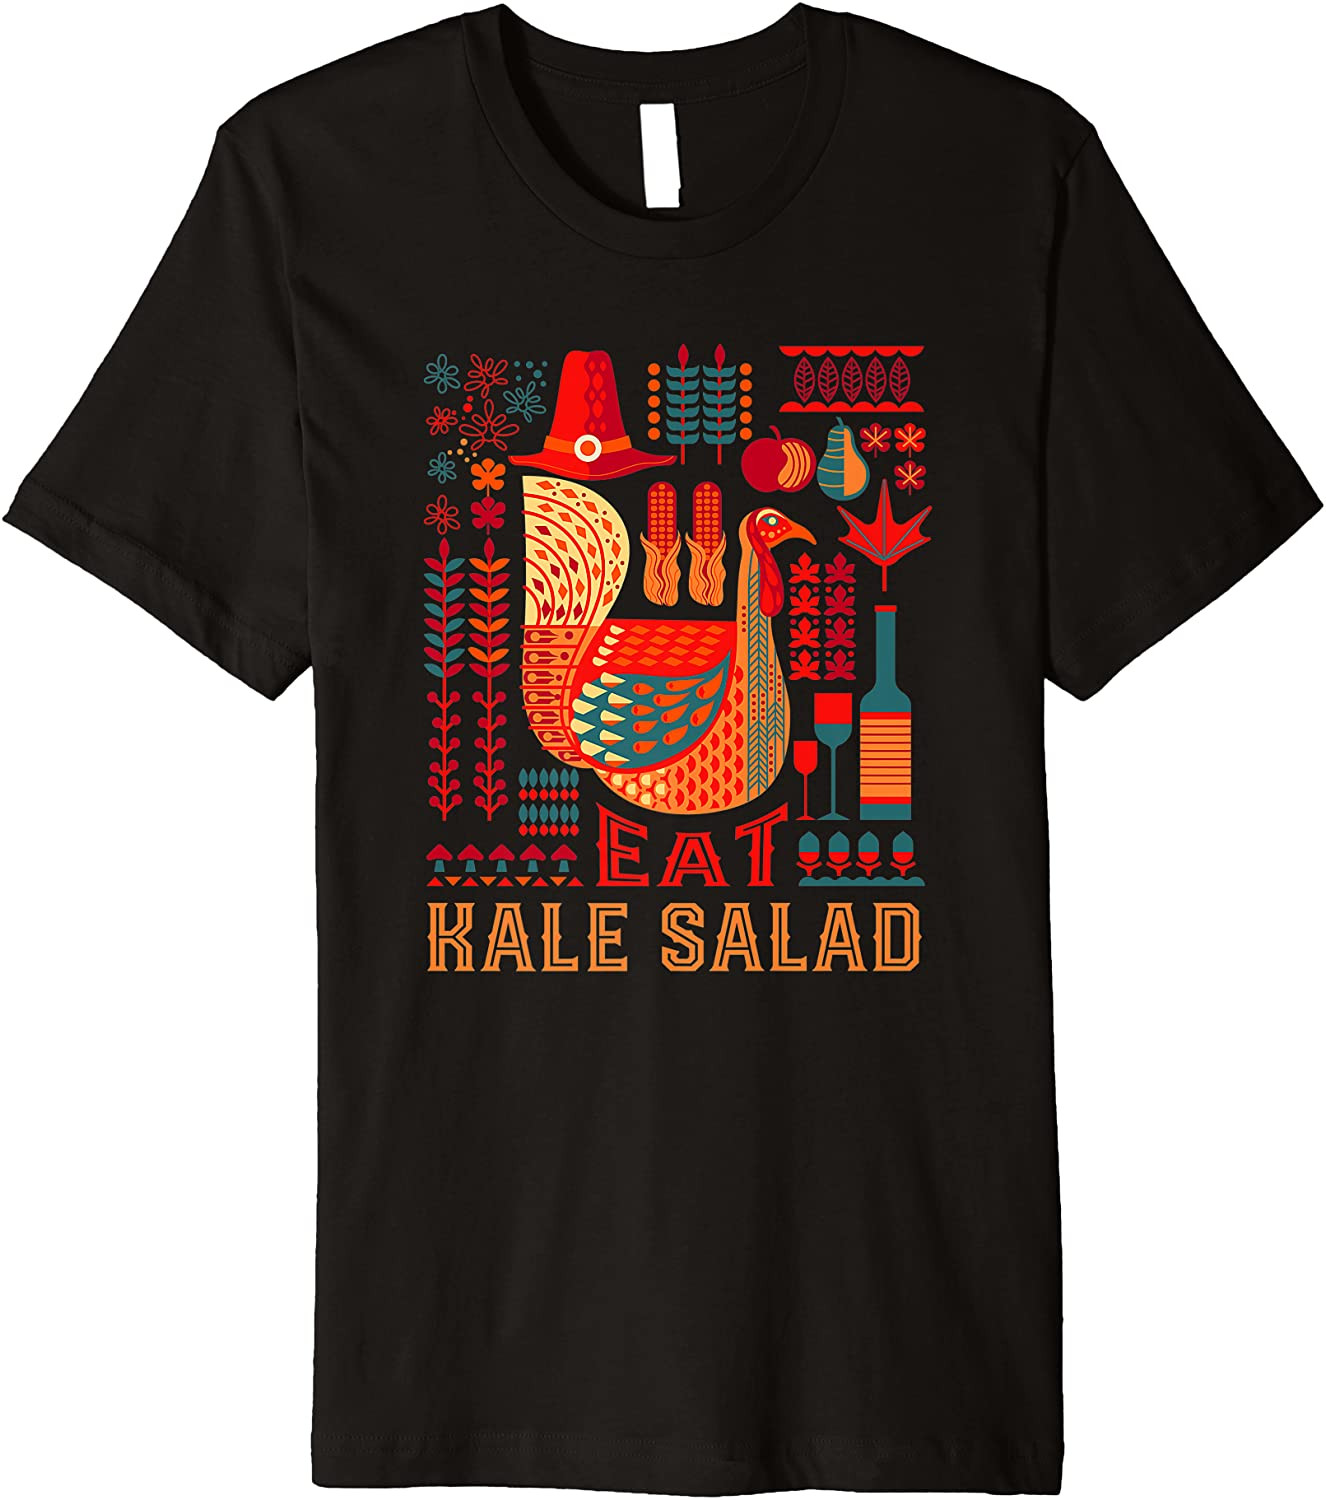 Turkey Eat Kale Salad Thanksgiving Comfort Food Black Friday T-Shirt